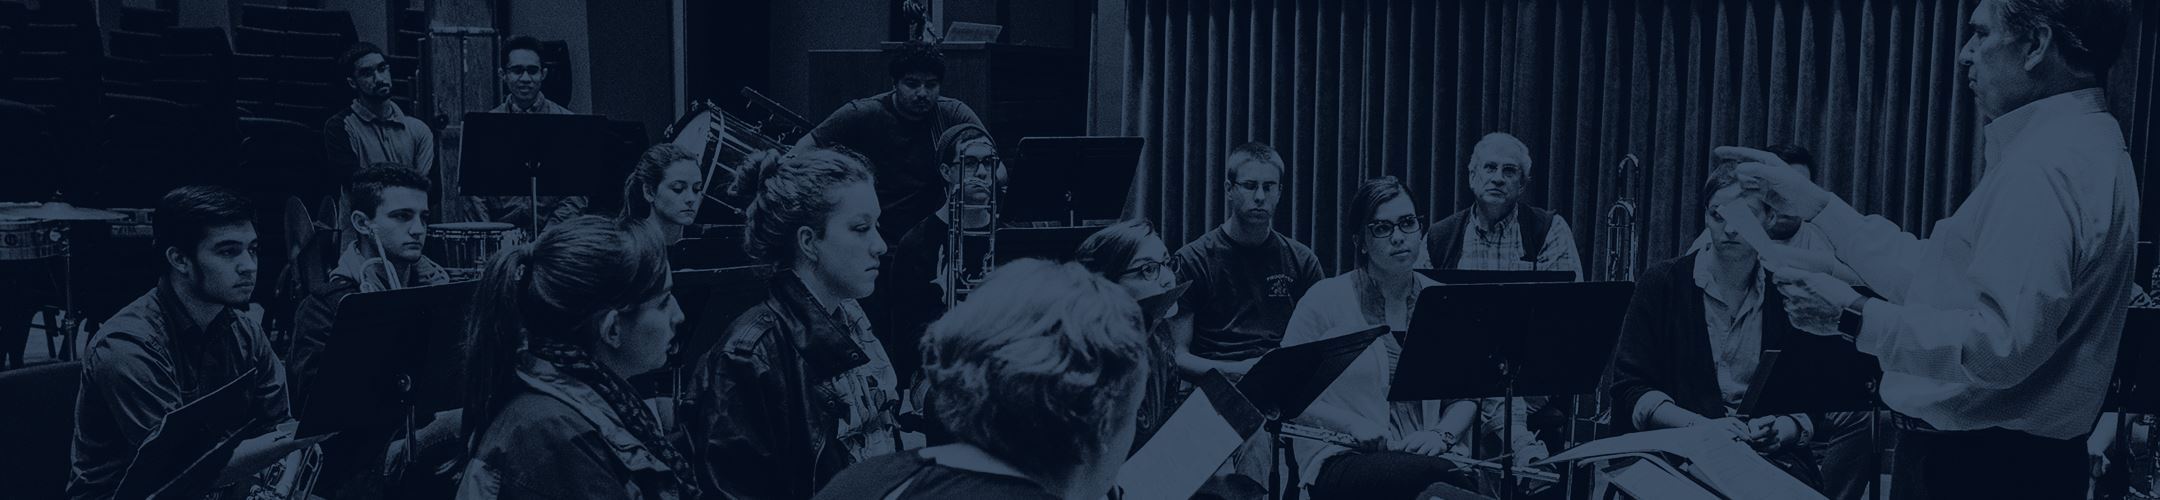 Orchestra 2019 Concert header-img